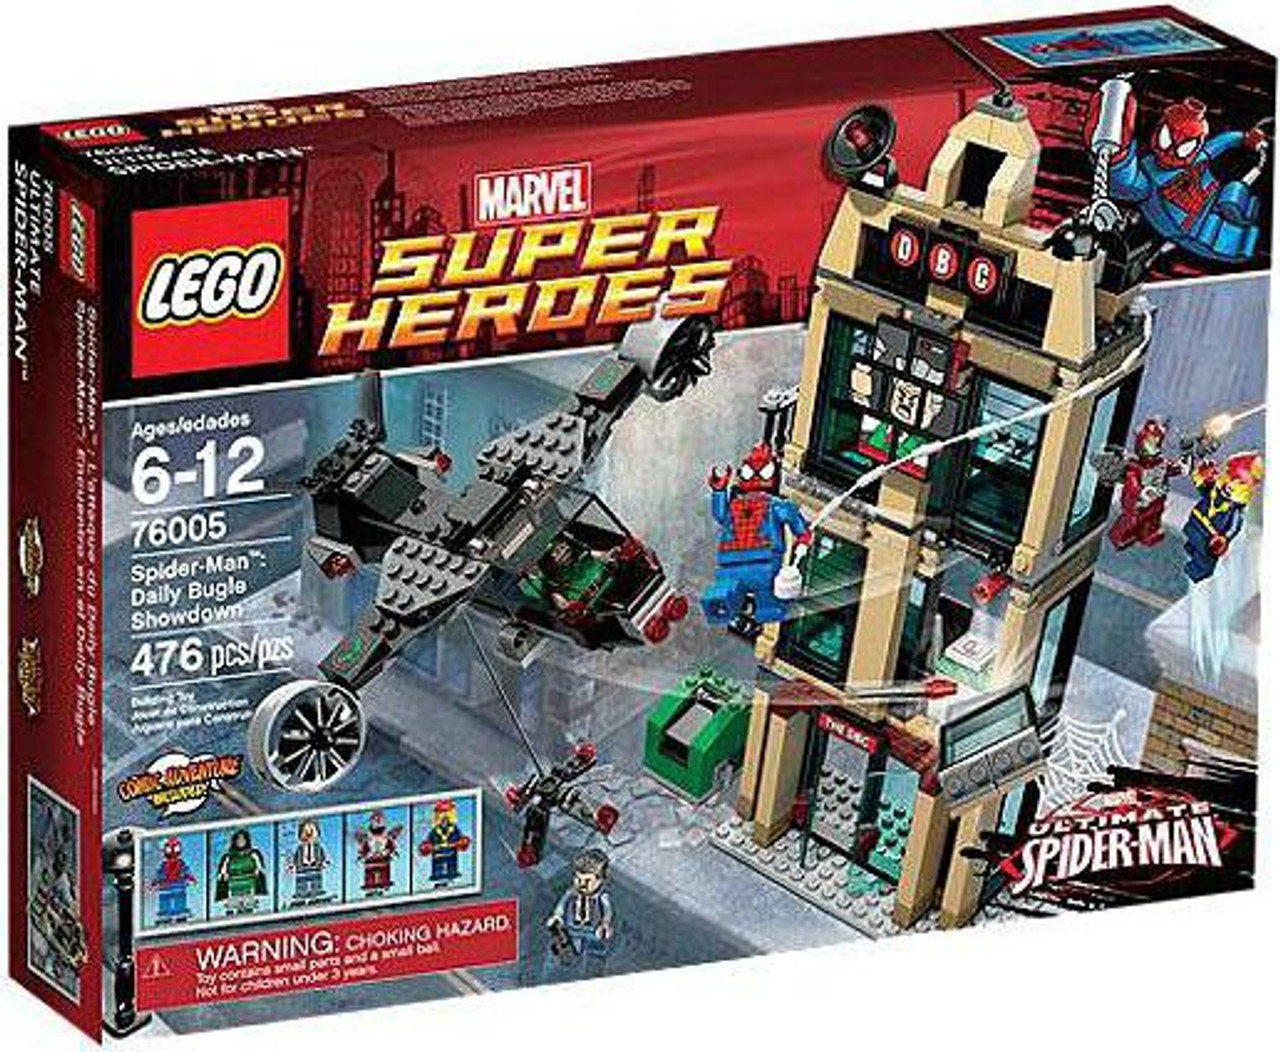 LEGO Marvel Super Heroes Ultimate SpiderMan Daily Bugle Showdown Set